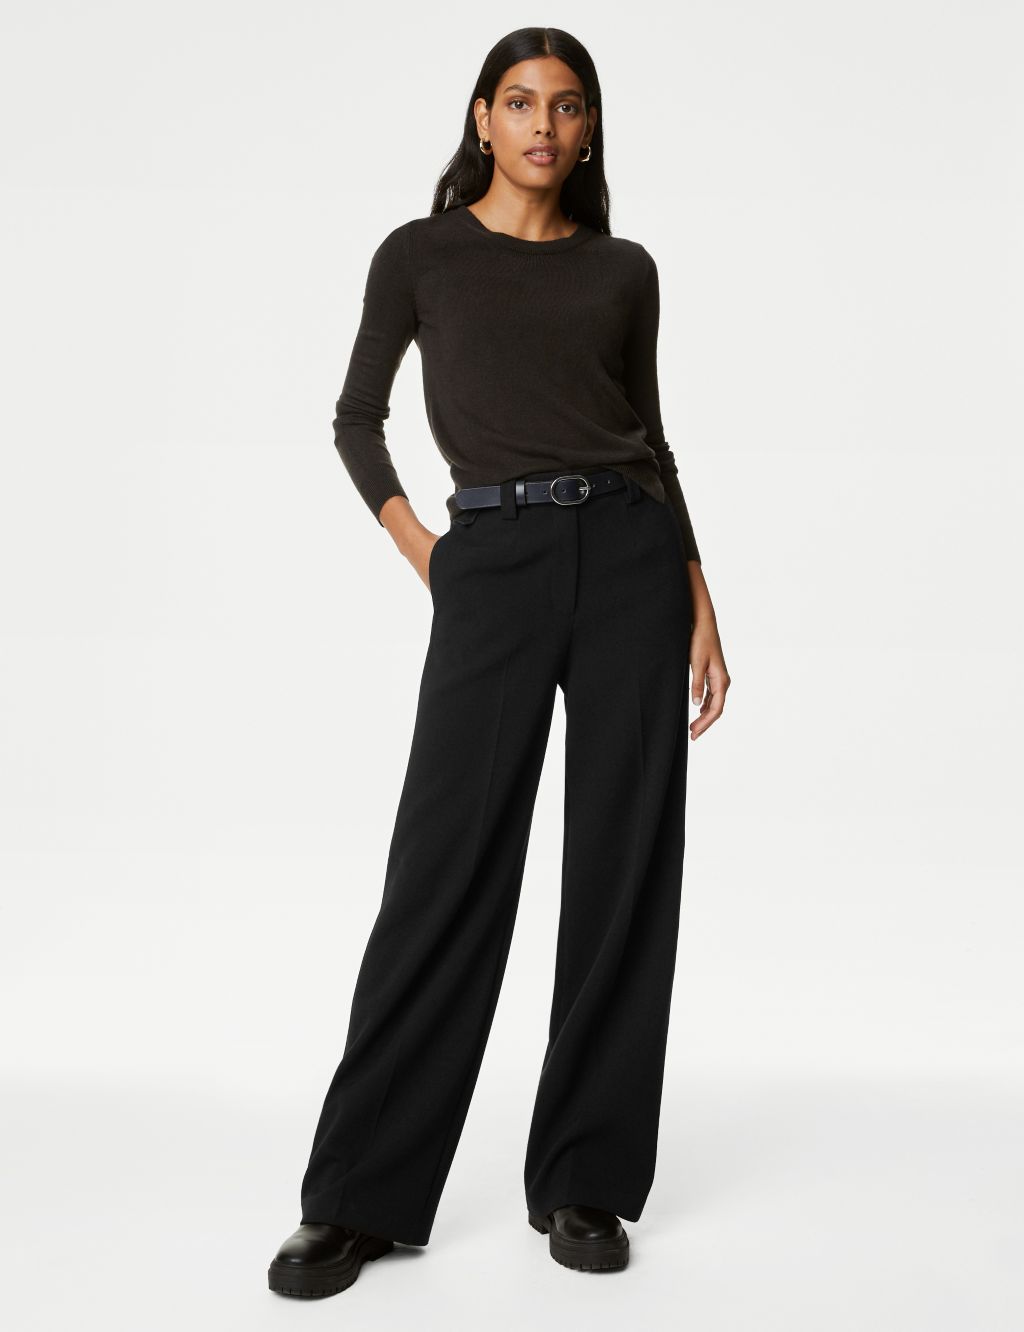 Women's Ladies Formal Office Trouser or Workwear Pant Black